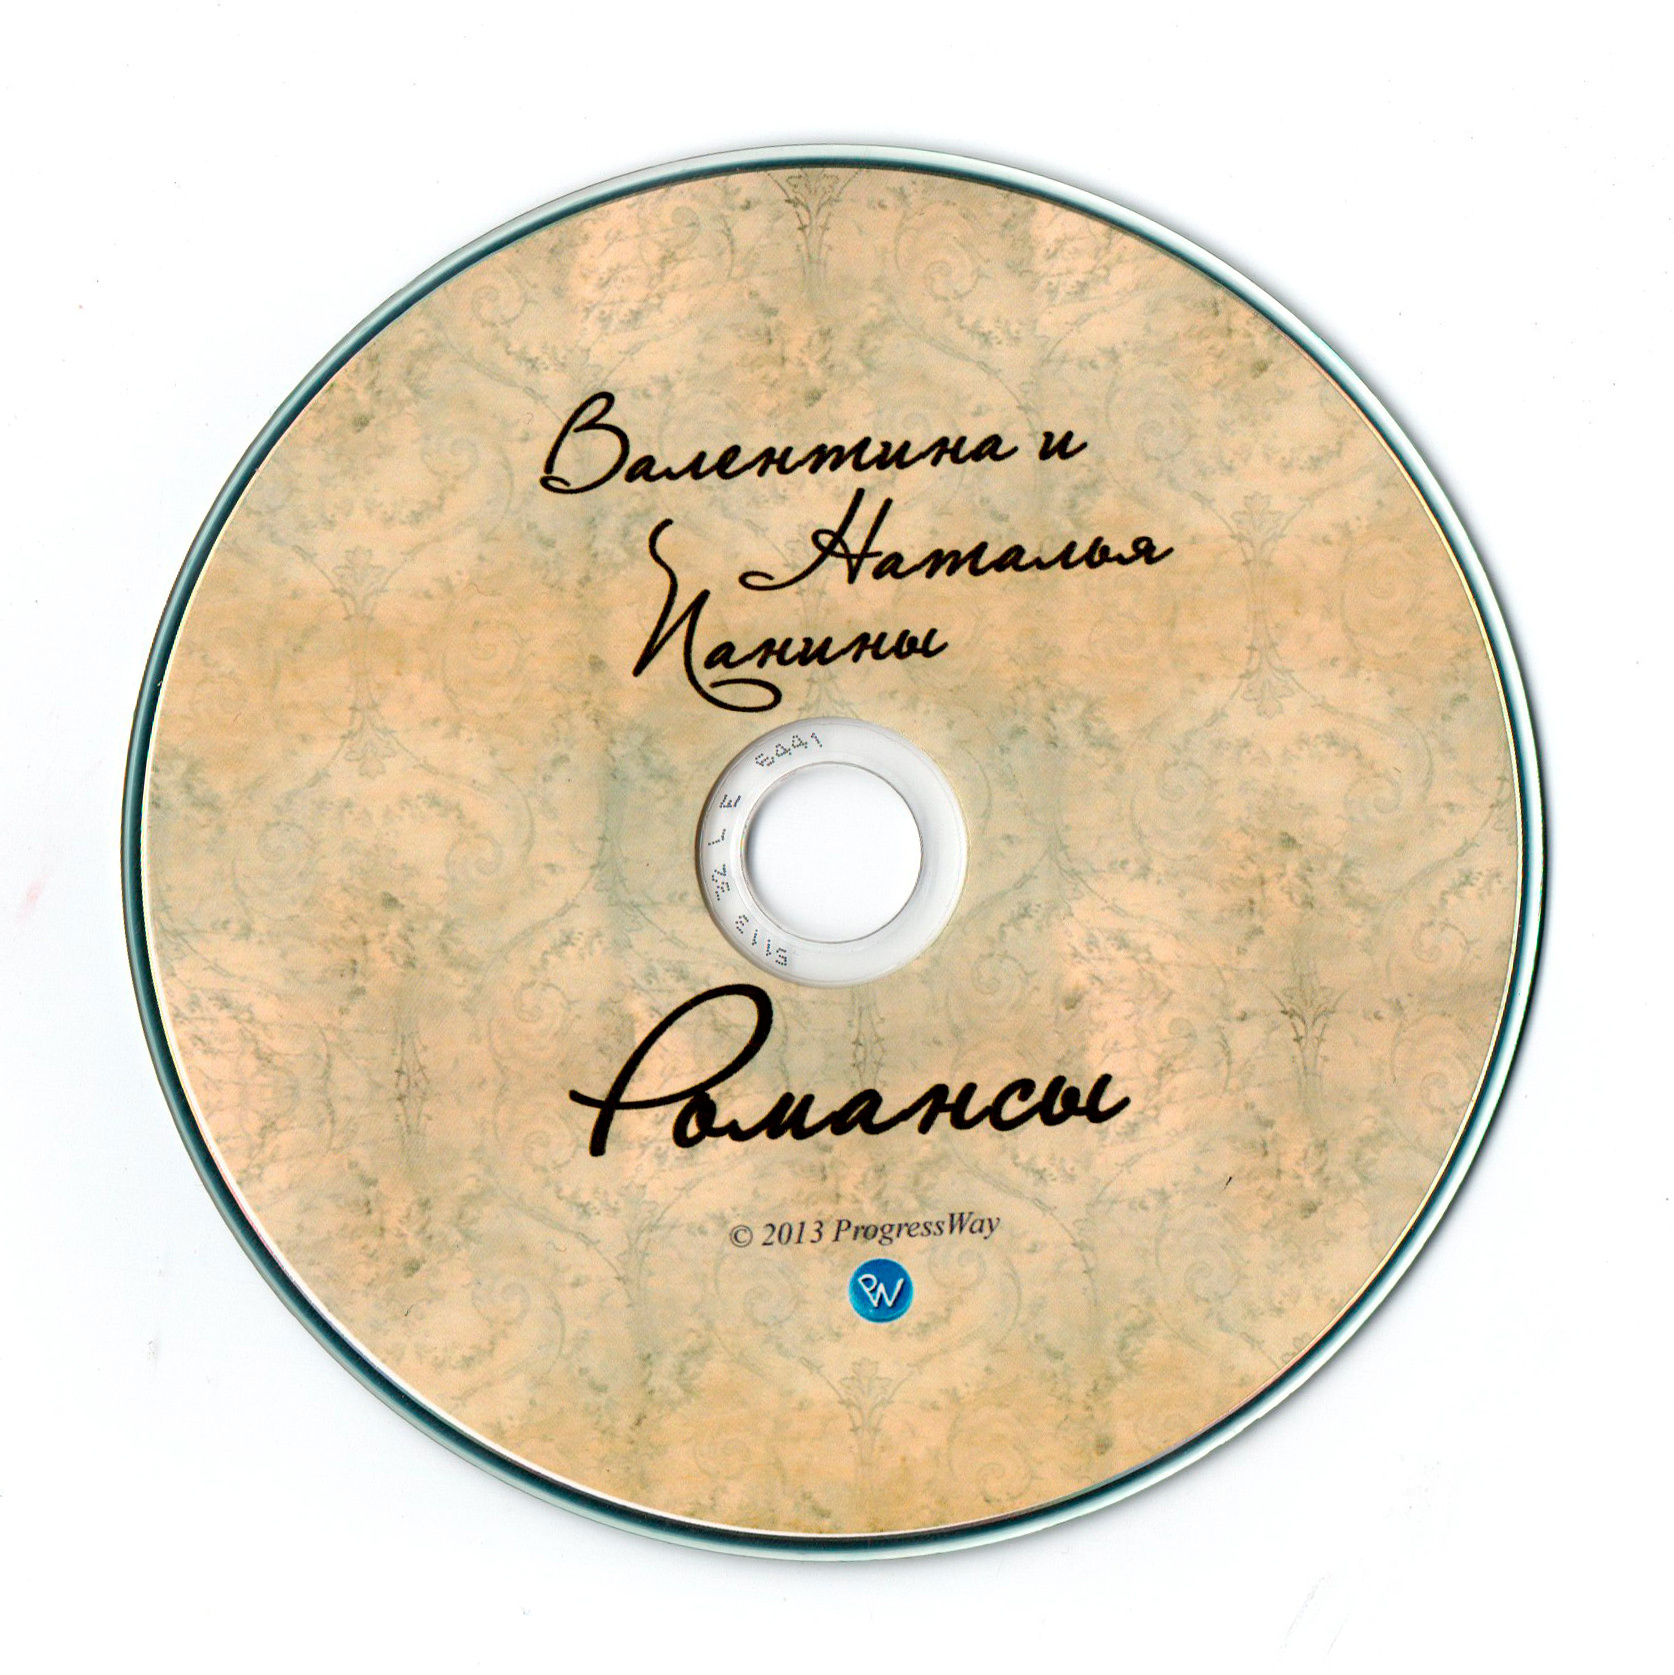 Цена романса. Компакт диск с романсами. Компакт диск с романсами старинными. Романс о Валентине. Ваше благородие. Романсы (CD).